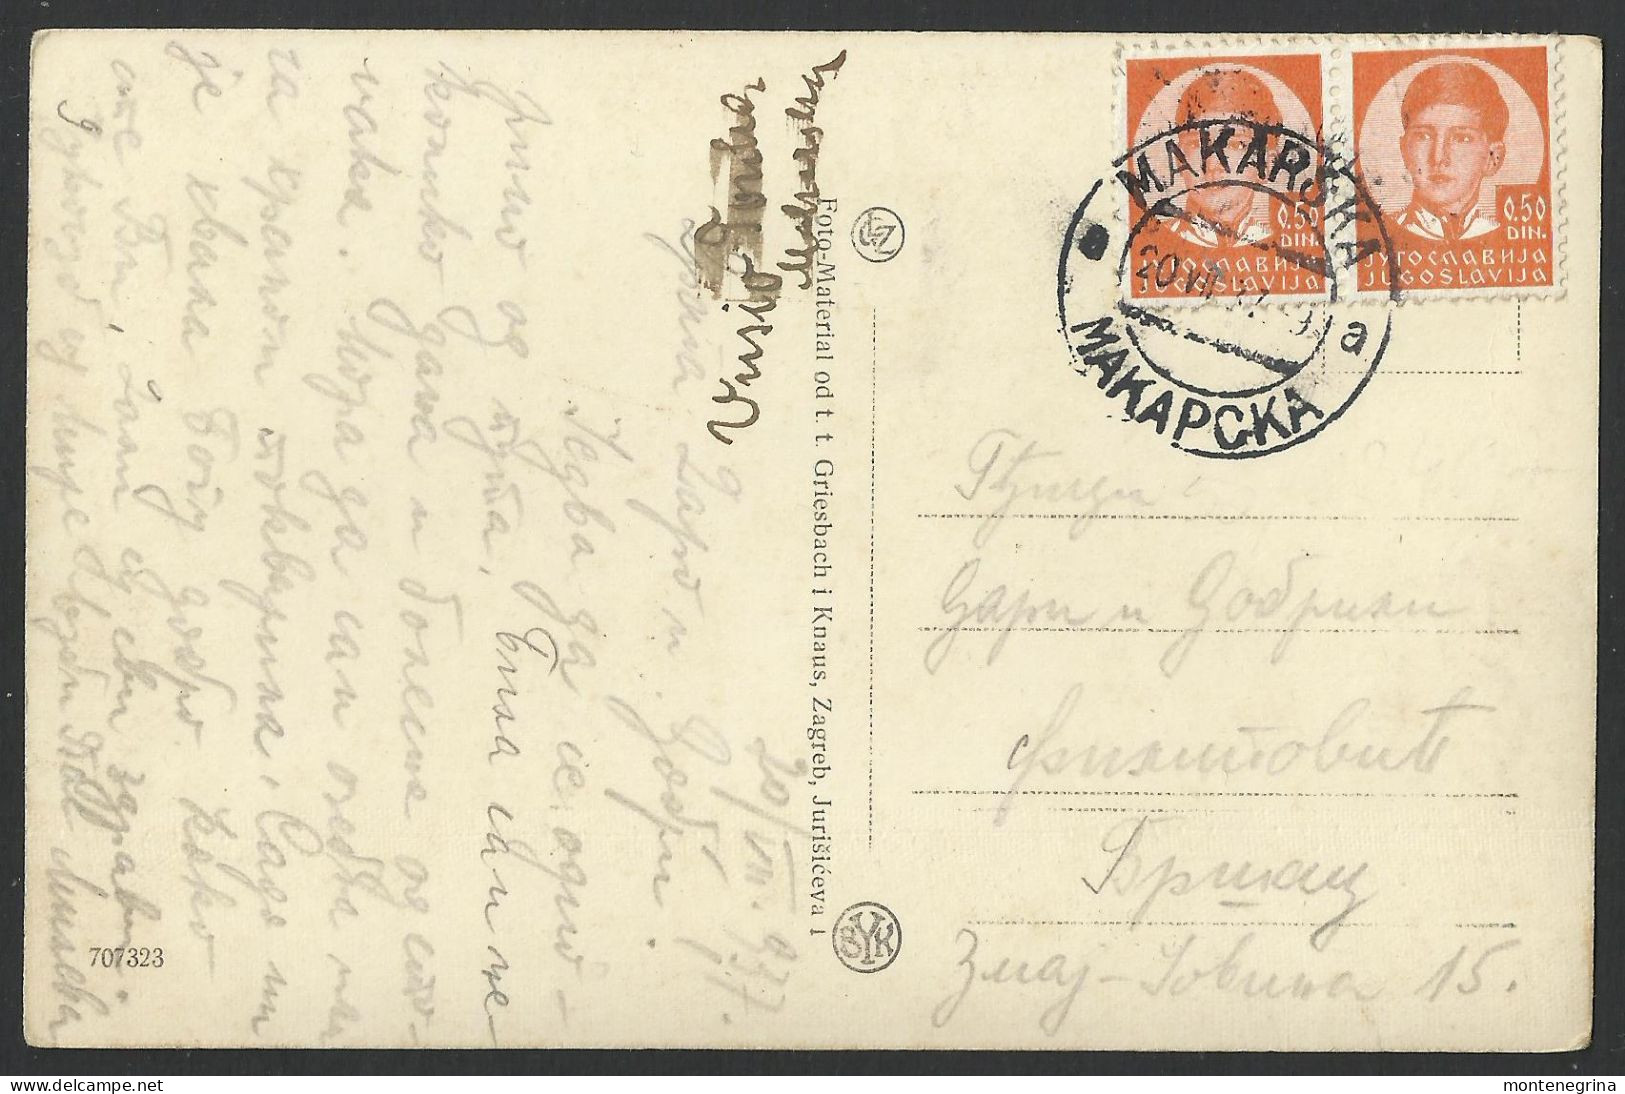 CROATIA MAKARSKA - Panorama - Old 1937 Postcard (see Sales Conditions) 010161 - Croatia